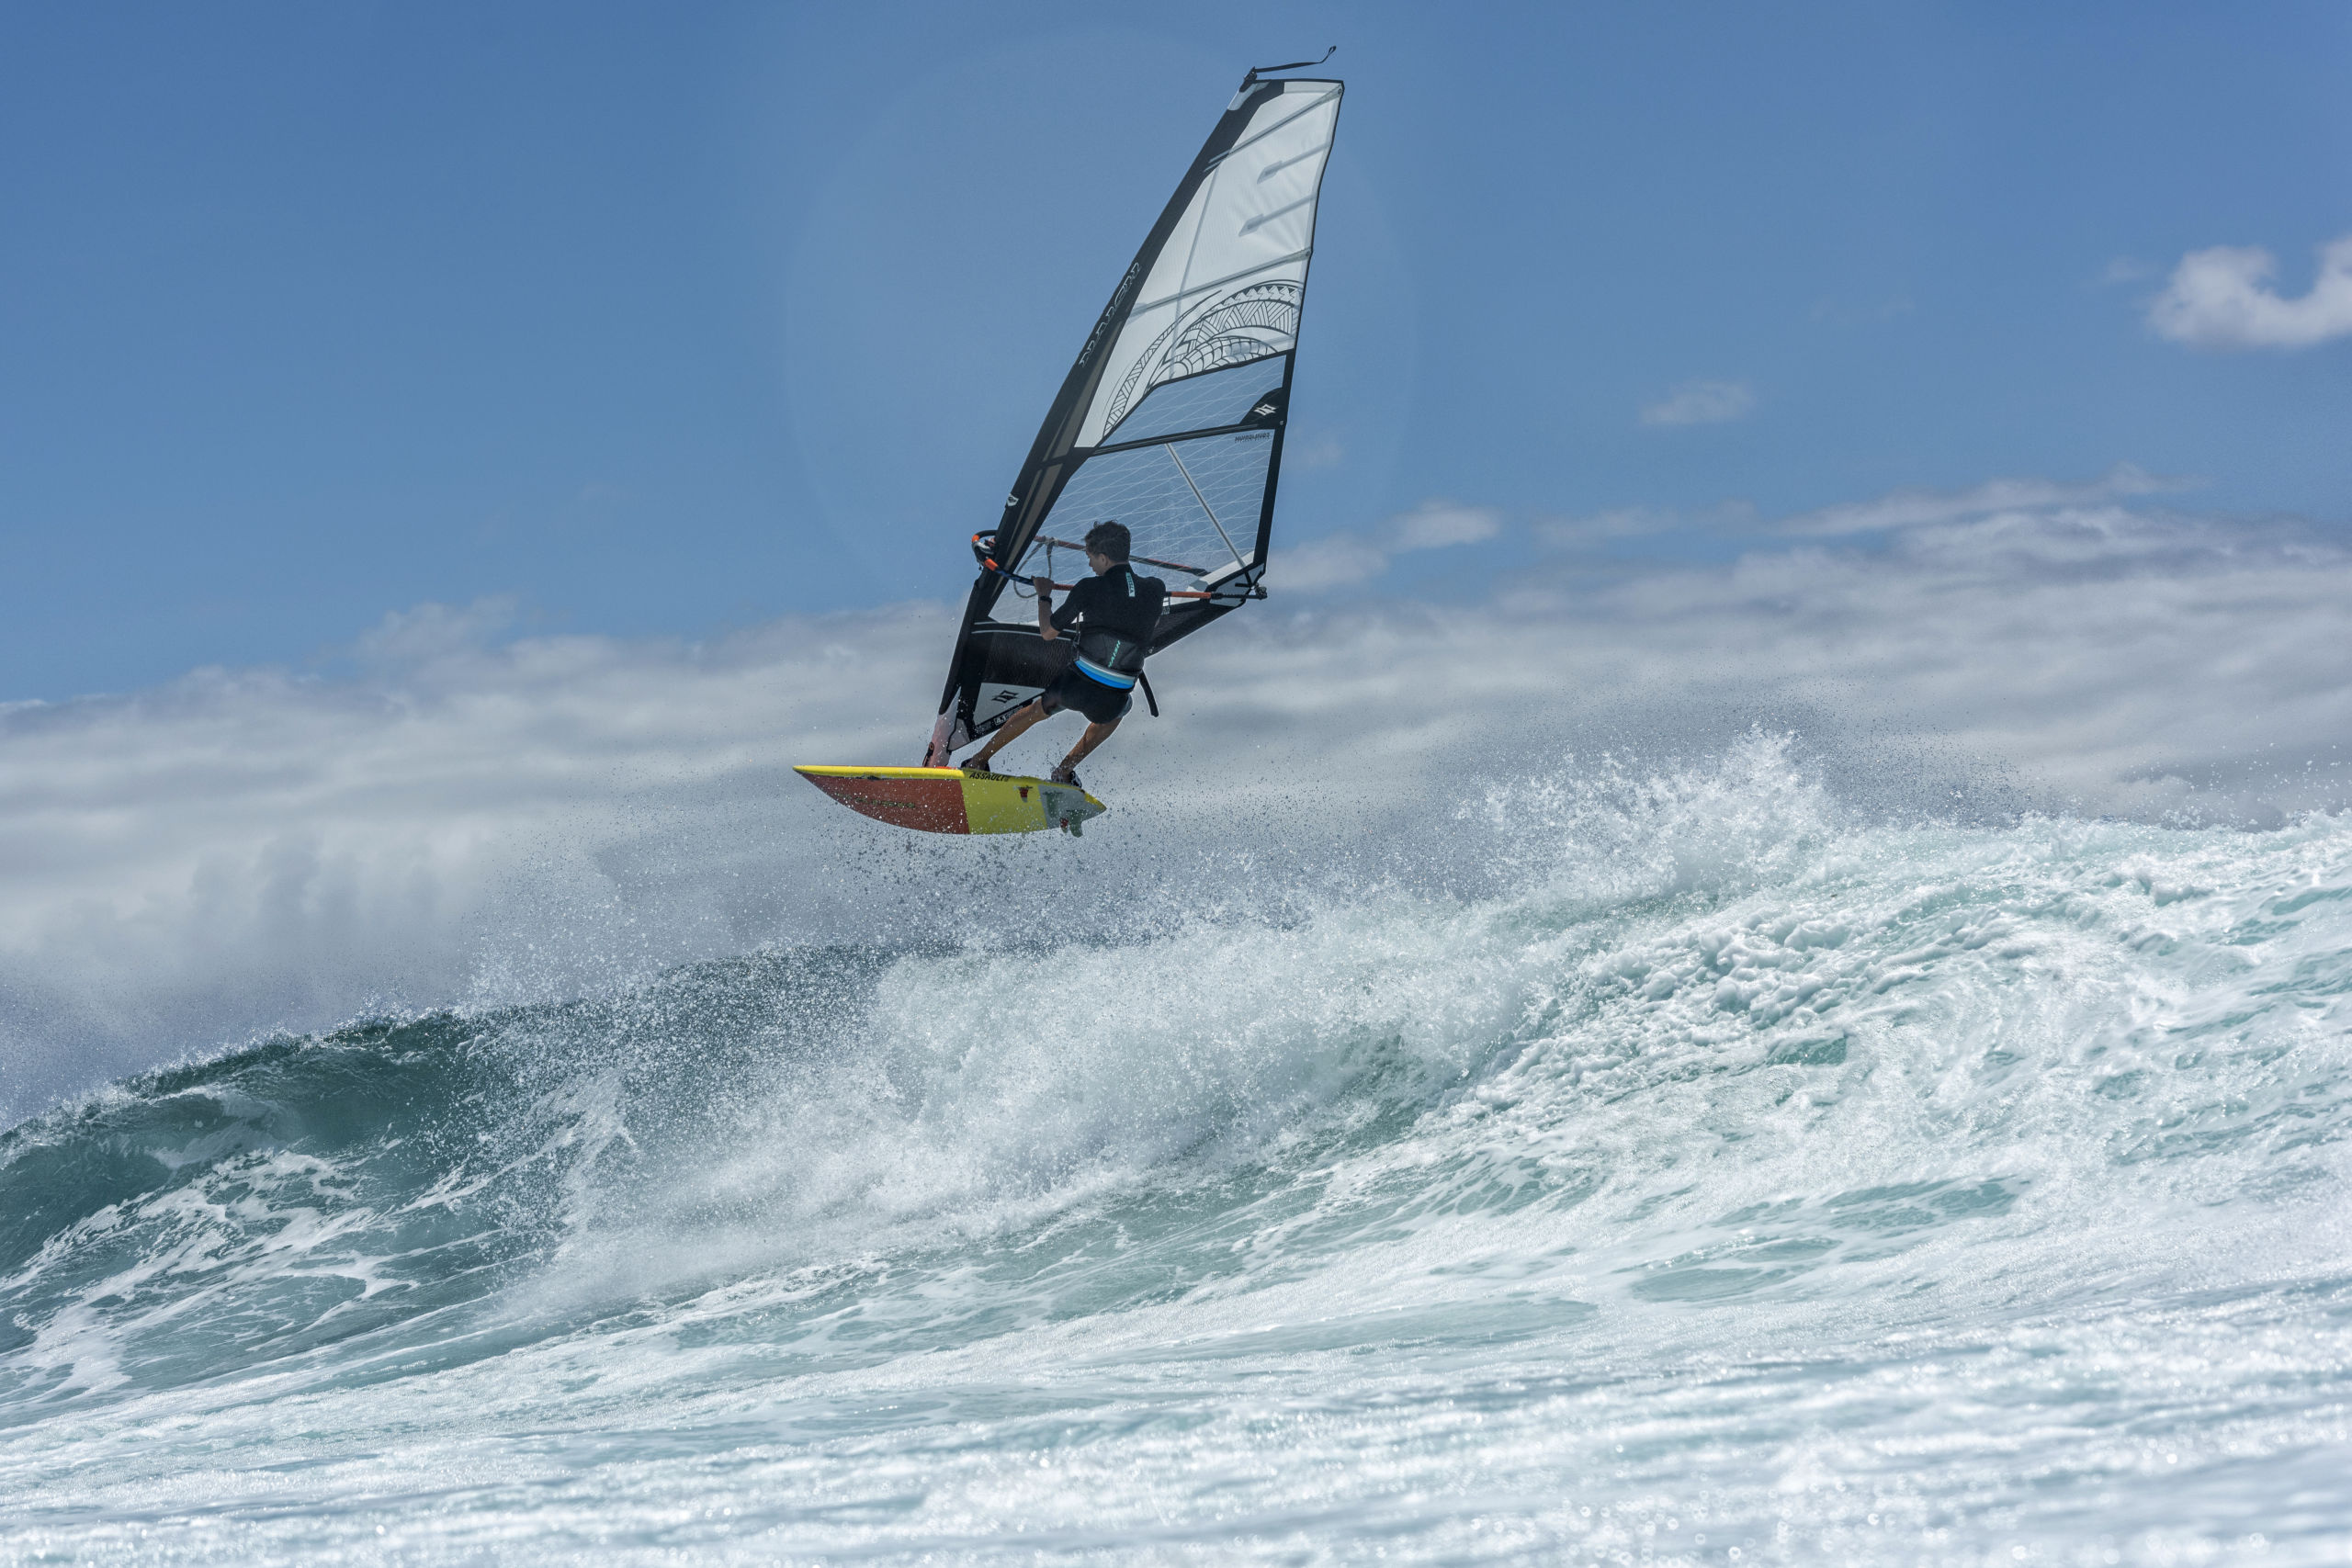 Windsurfing: The Naish International Windsurfing Team, Maui Ripper Z Schettewi, Mavericks and Nazare, Windsurfing Jaws. 2560x1710 HD Wallpaper.